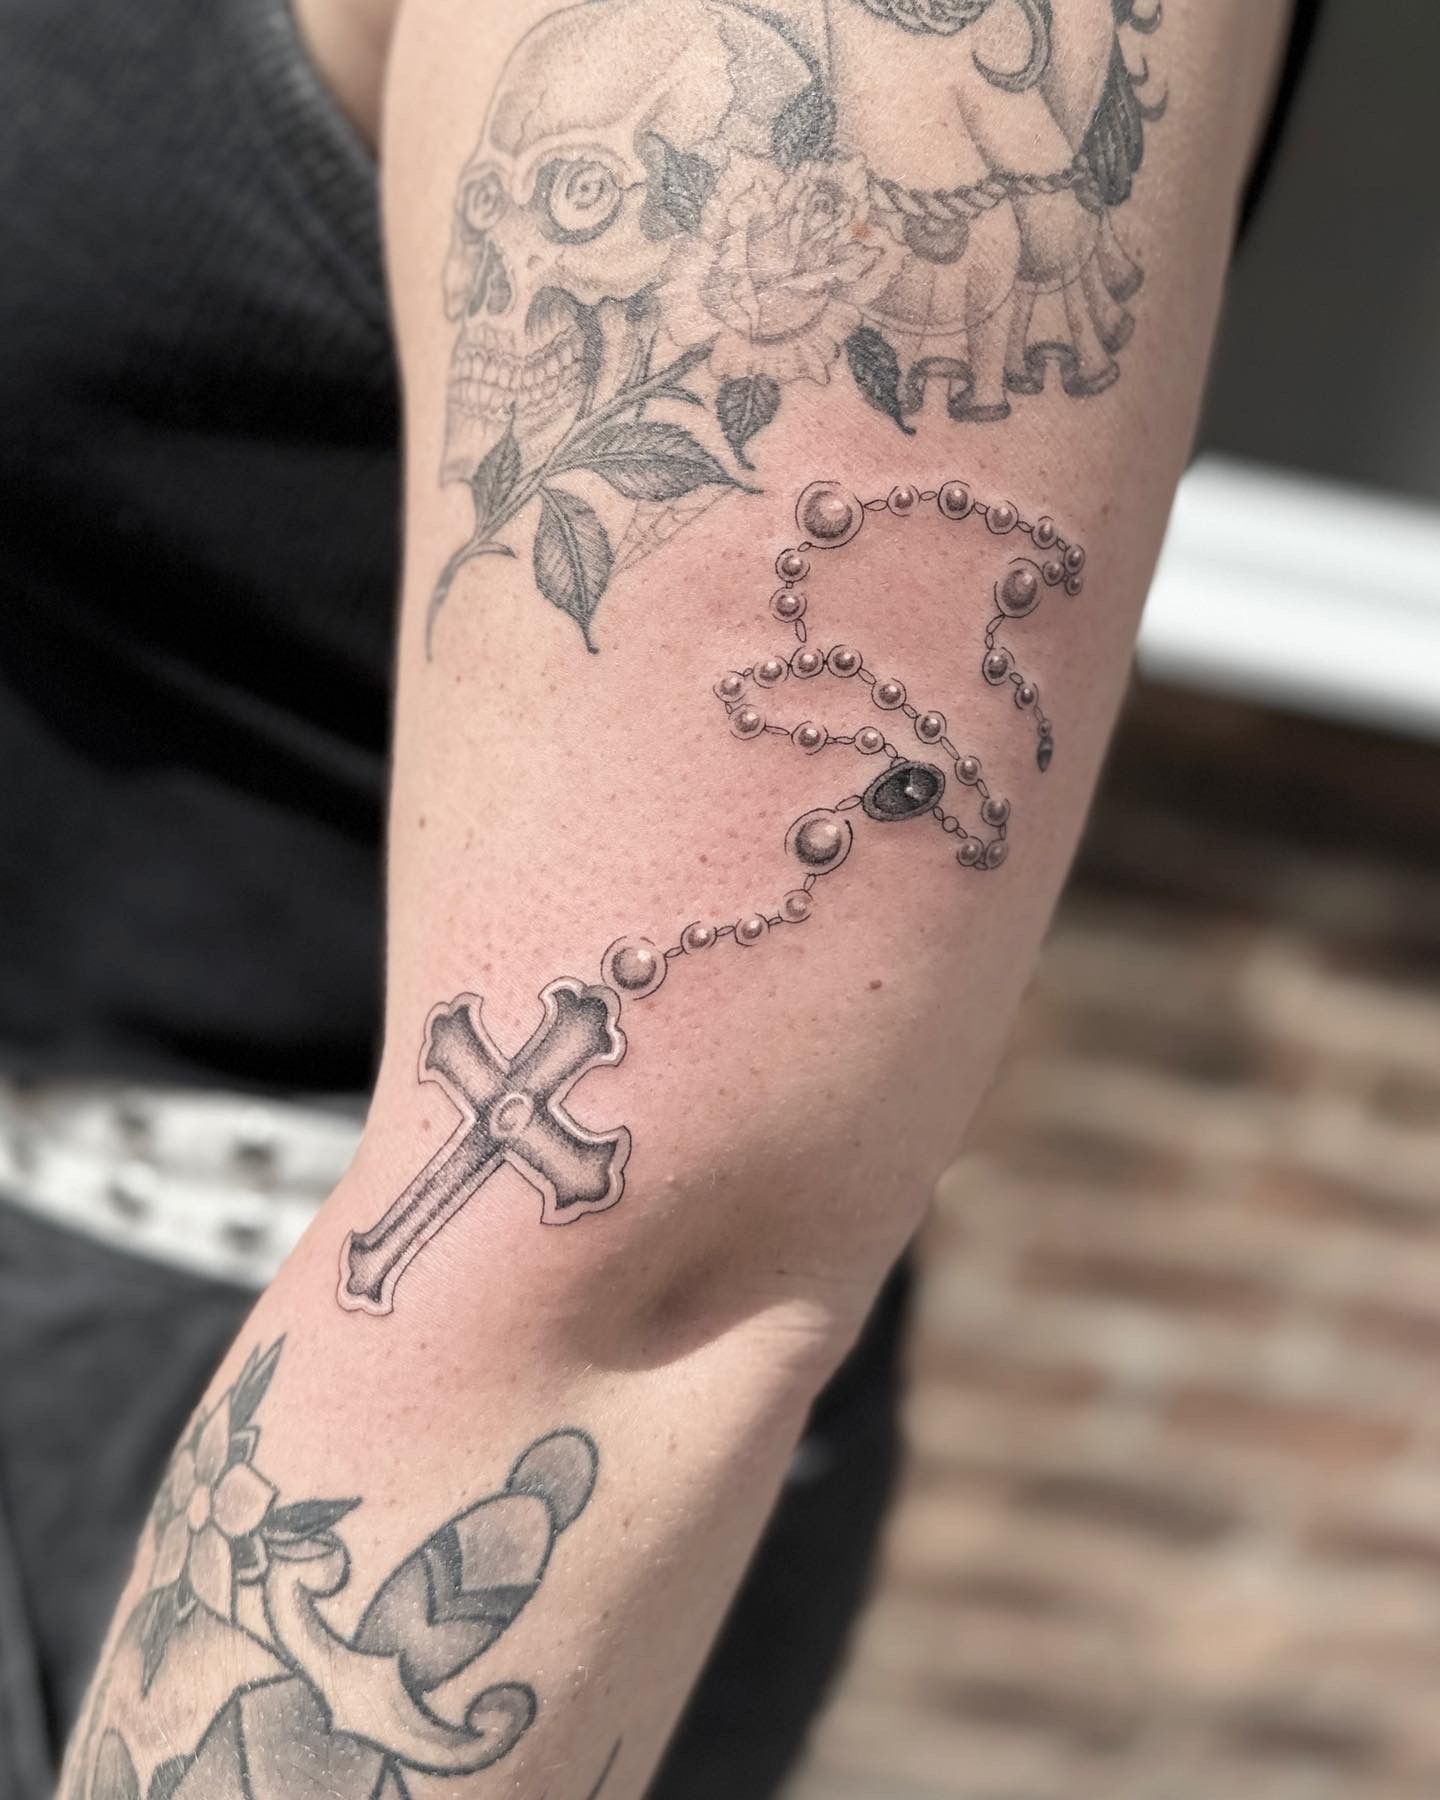 Fine line style wrist wrap rosary tattoo.